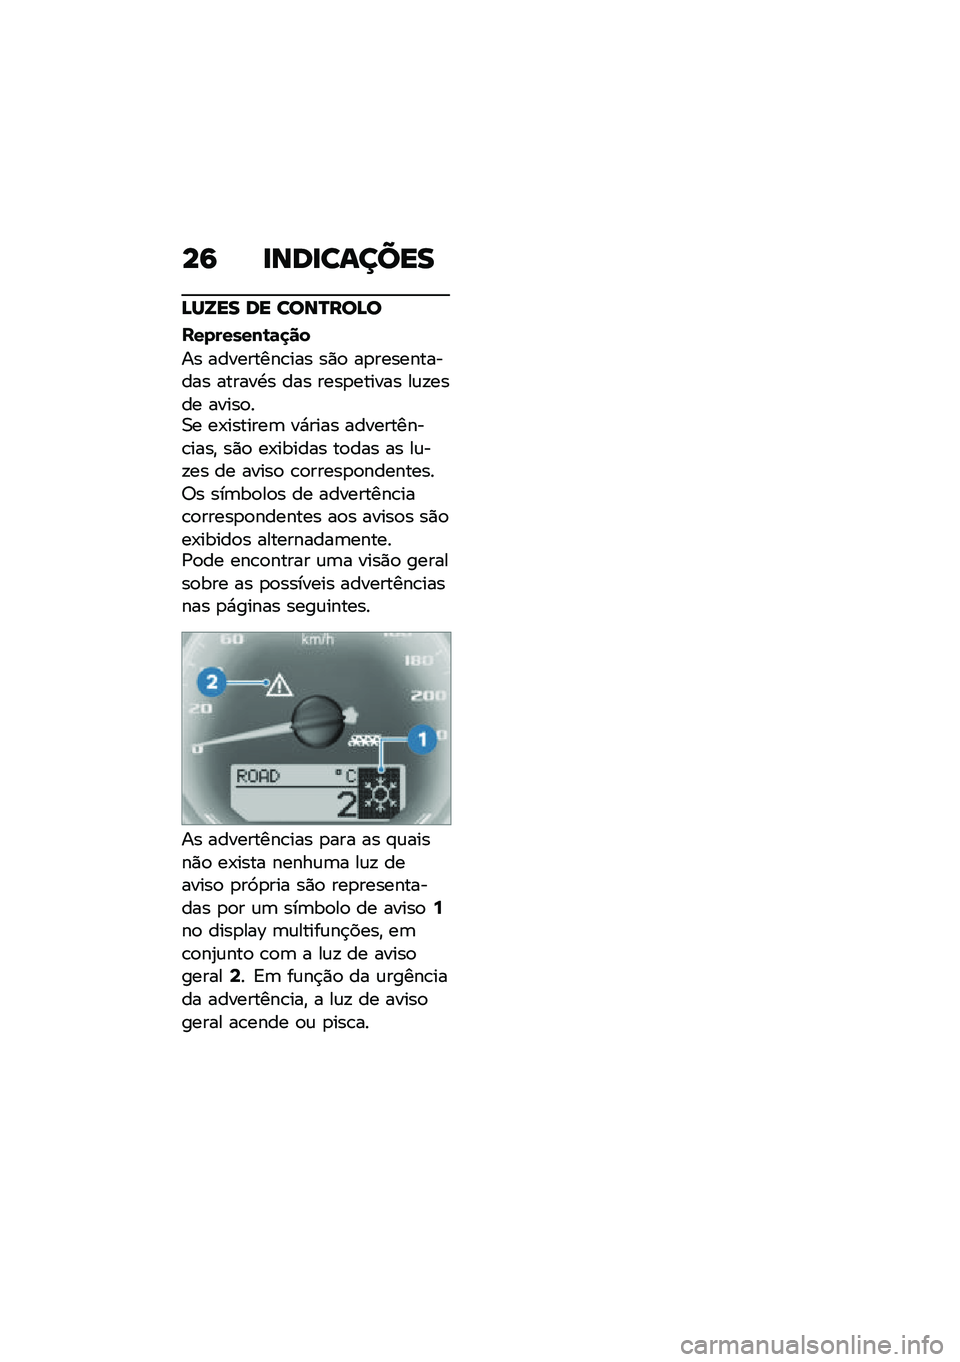 BMW MOTORRAD R NINE T URVAN G/S 2020  Manual do condutor (in Portuguese) ��9 �
���
������
�A��V�� �� ����N���A�
���������\b�	�
��
�� ���������\b��� ��)�
 ��
����������� ������.� ��� ����
������ ��\f